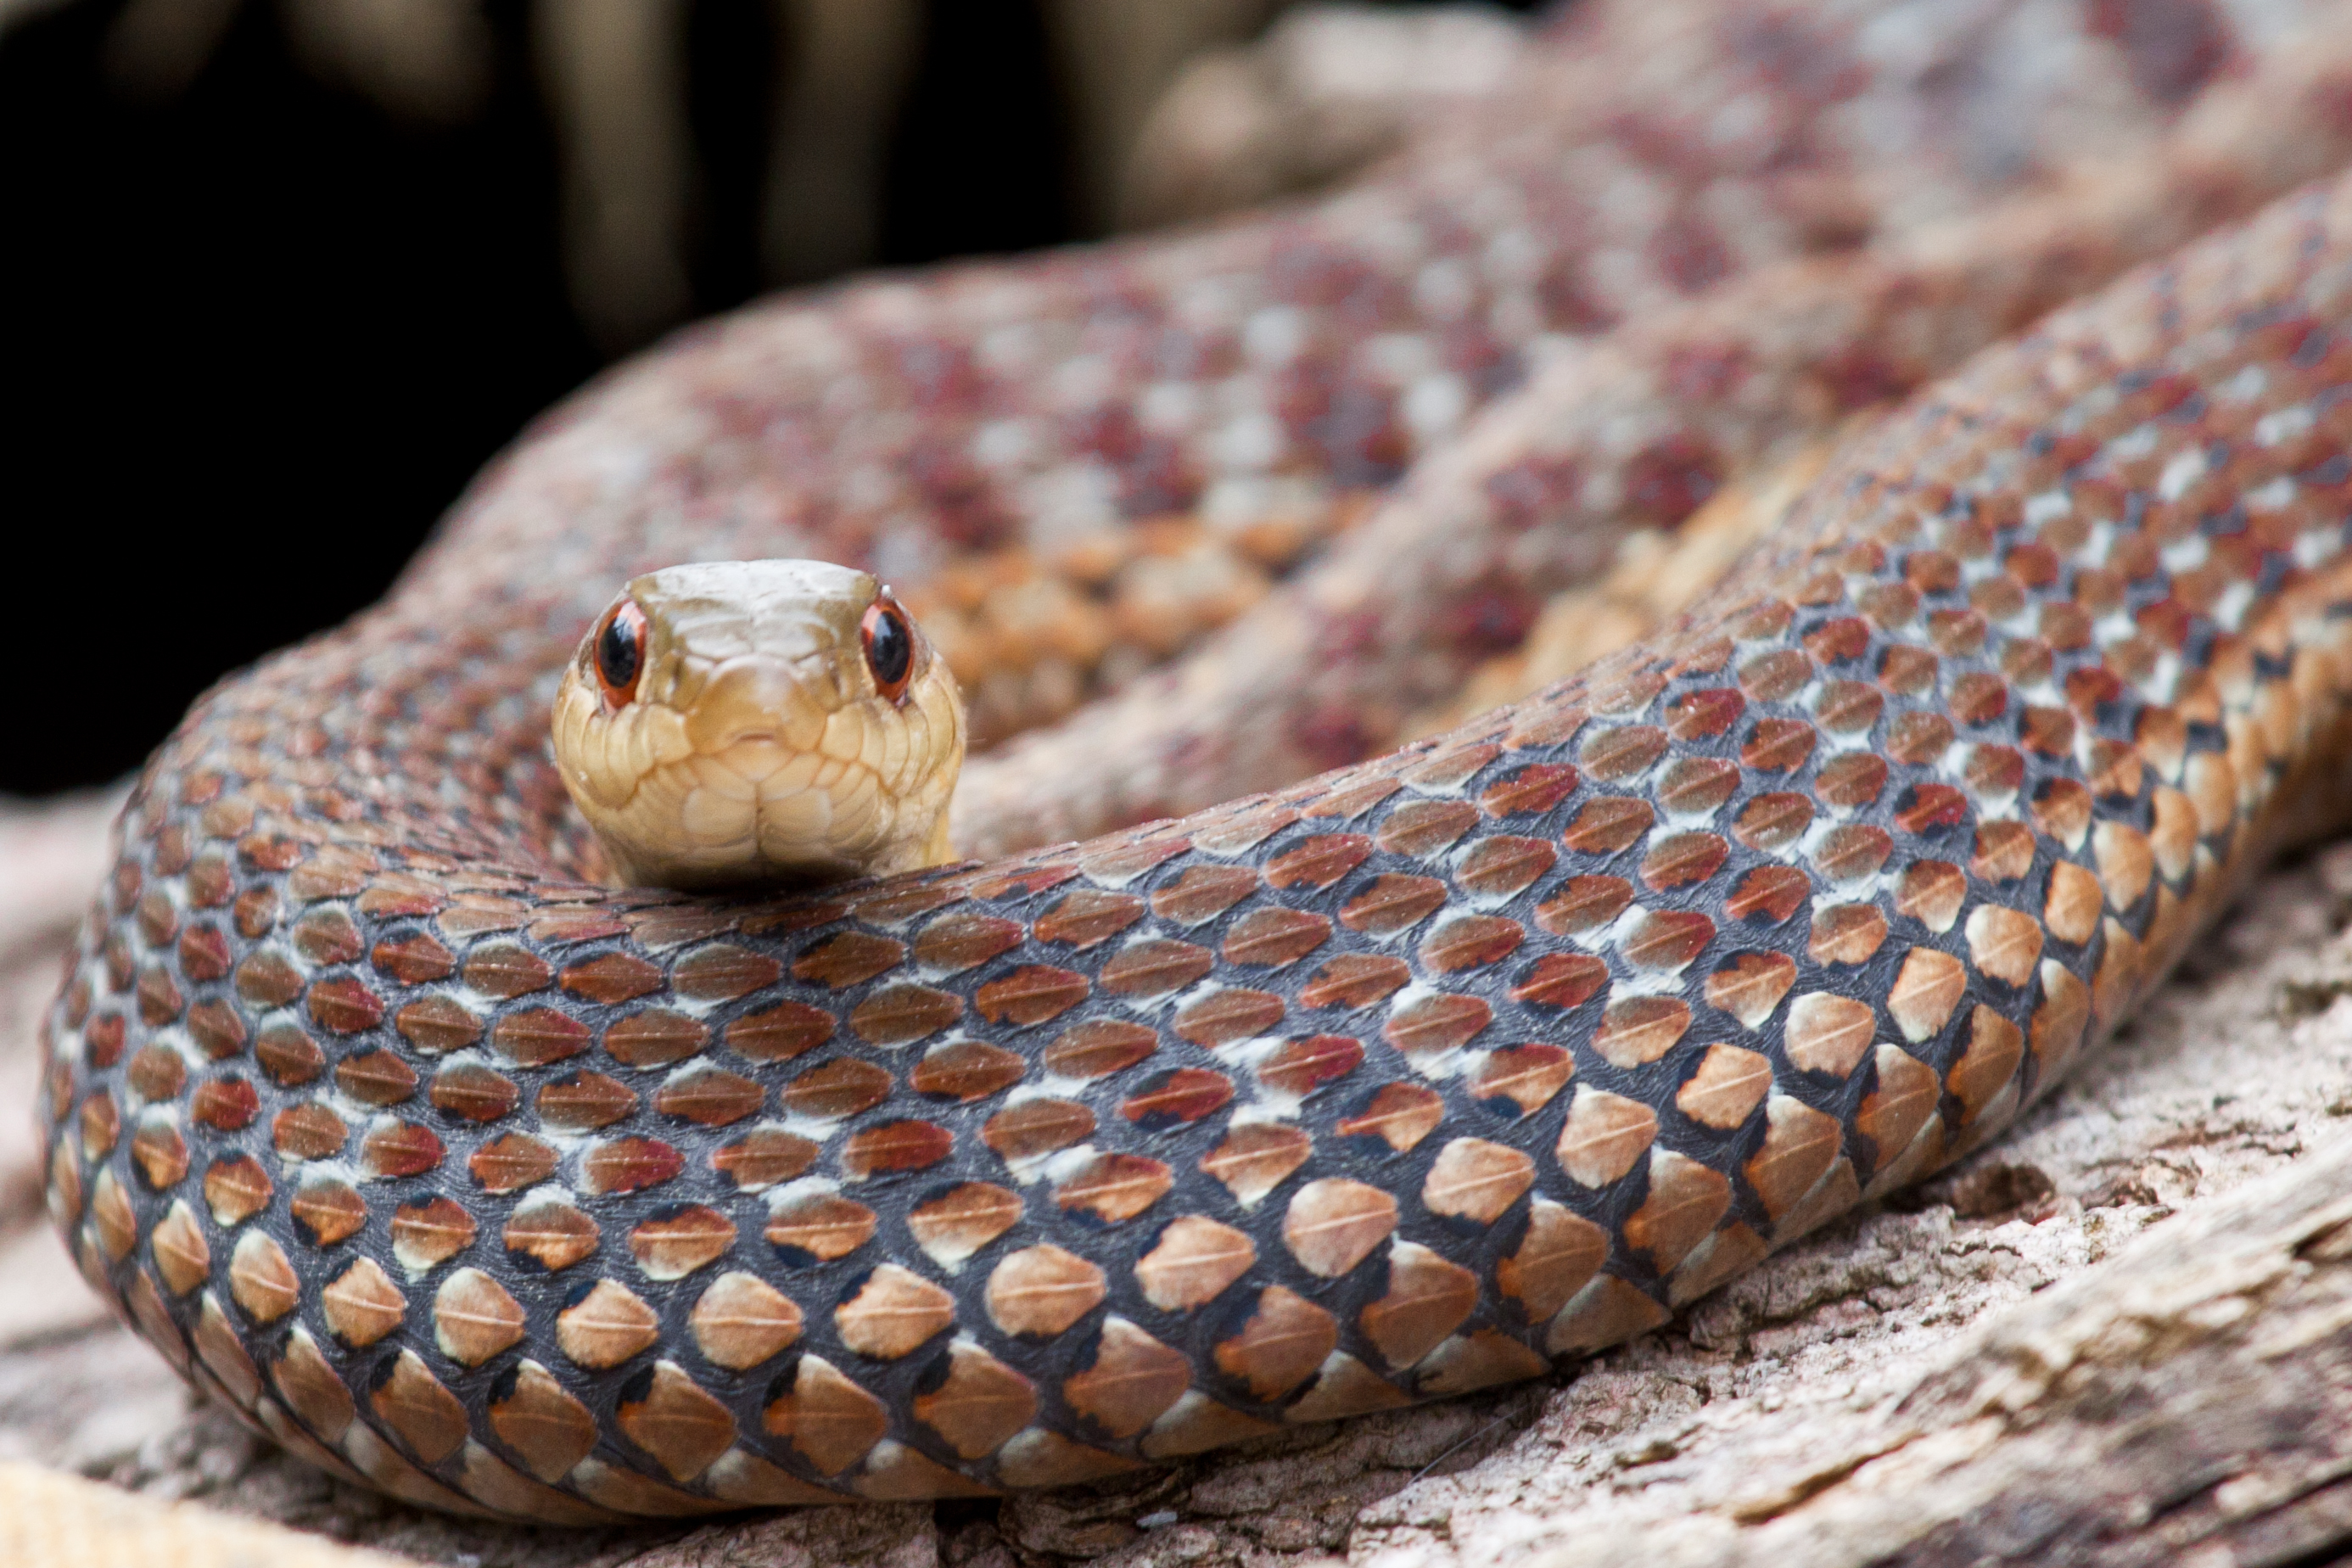 Garter snake, photo by Laurie Dirkx